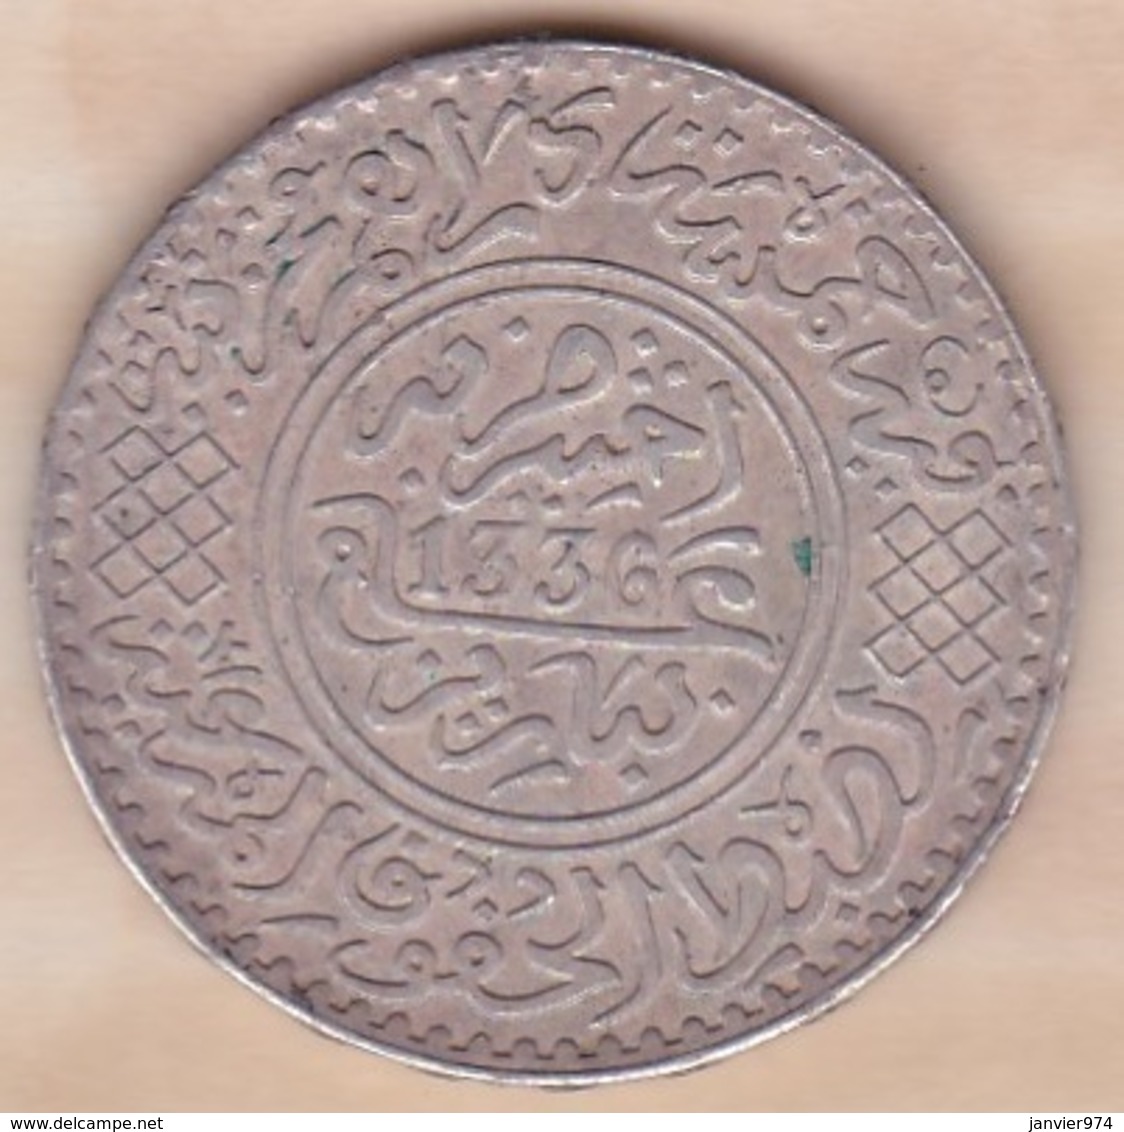 Maroc. 5 Dirhams (1/2 Rial) AH 1336 Paris. Yussef I. ARGENT - Marruecos